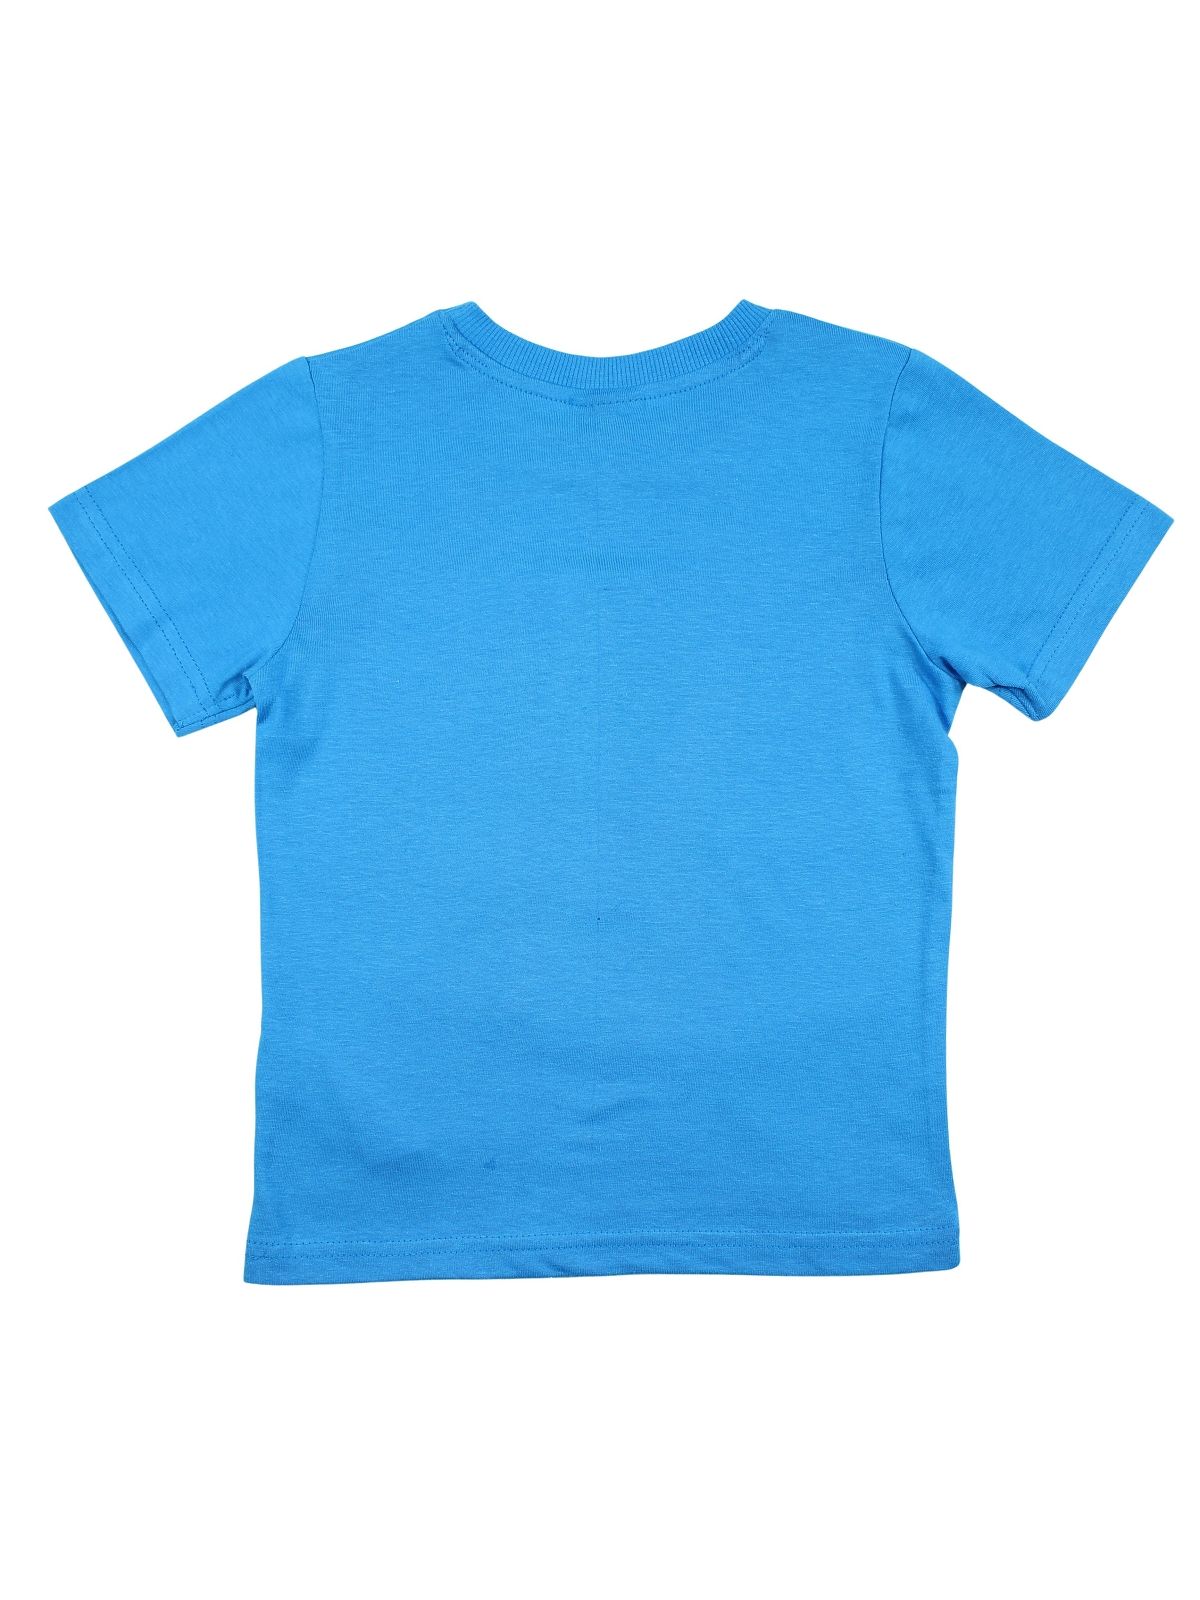 Lilo und Stitch-T-Shirt.